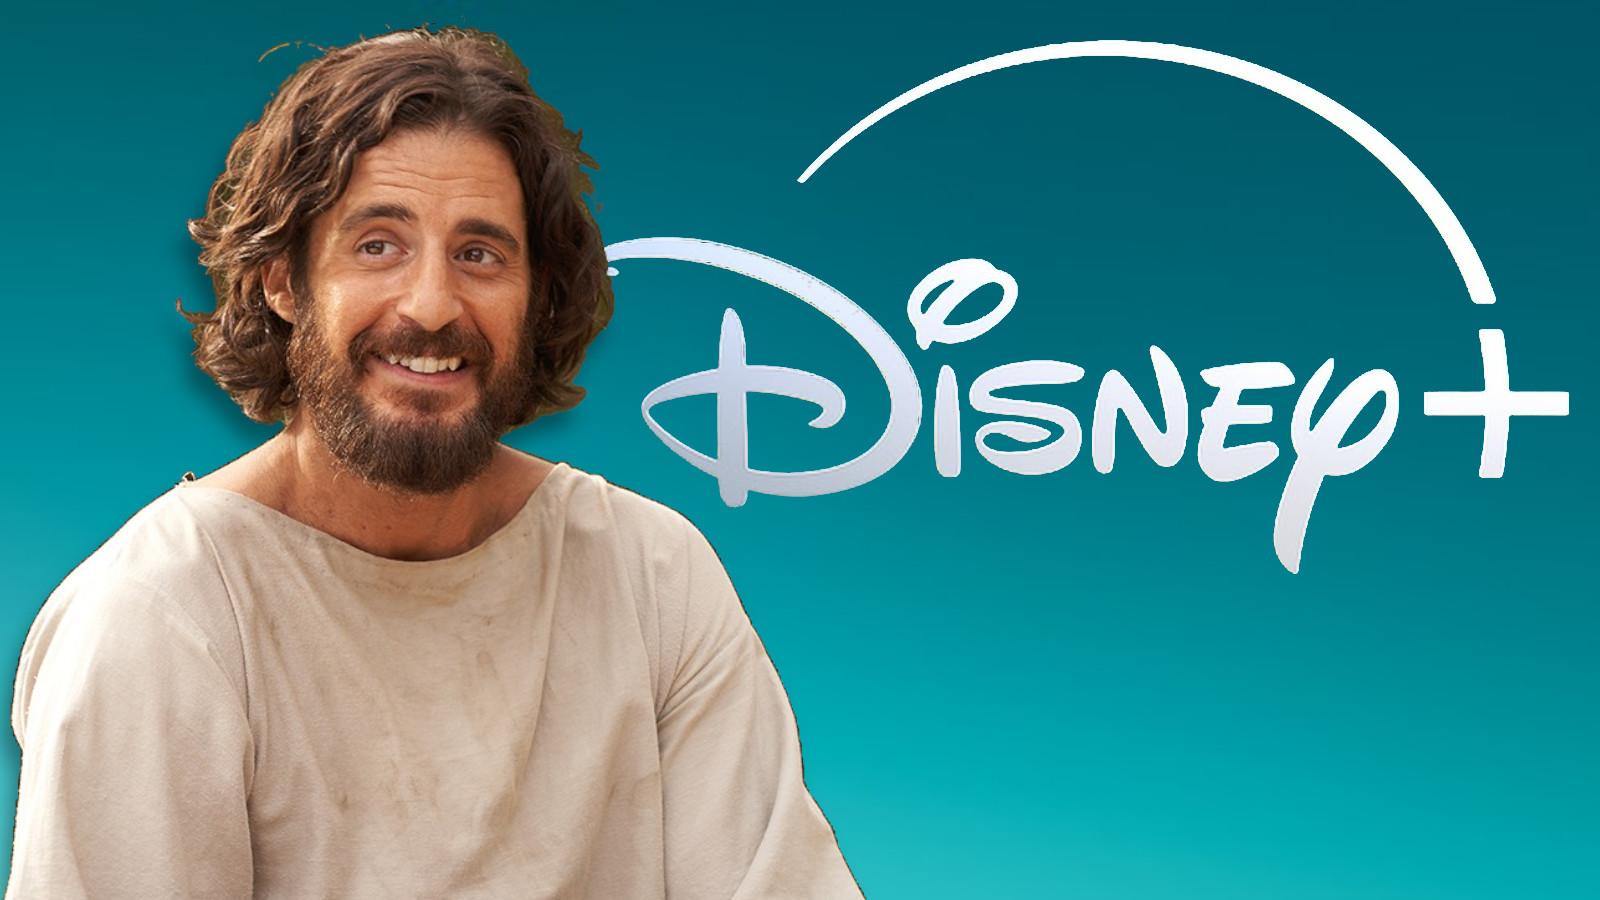 The Chosen's Jesus with the Disney+ logo